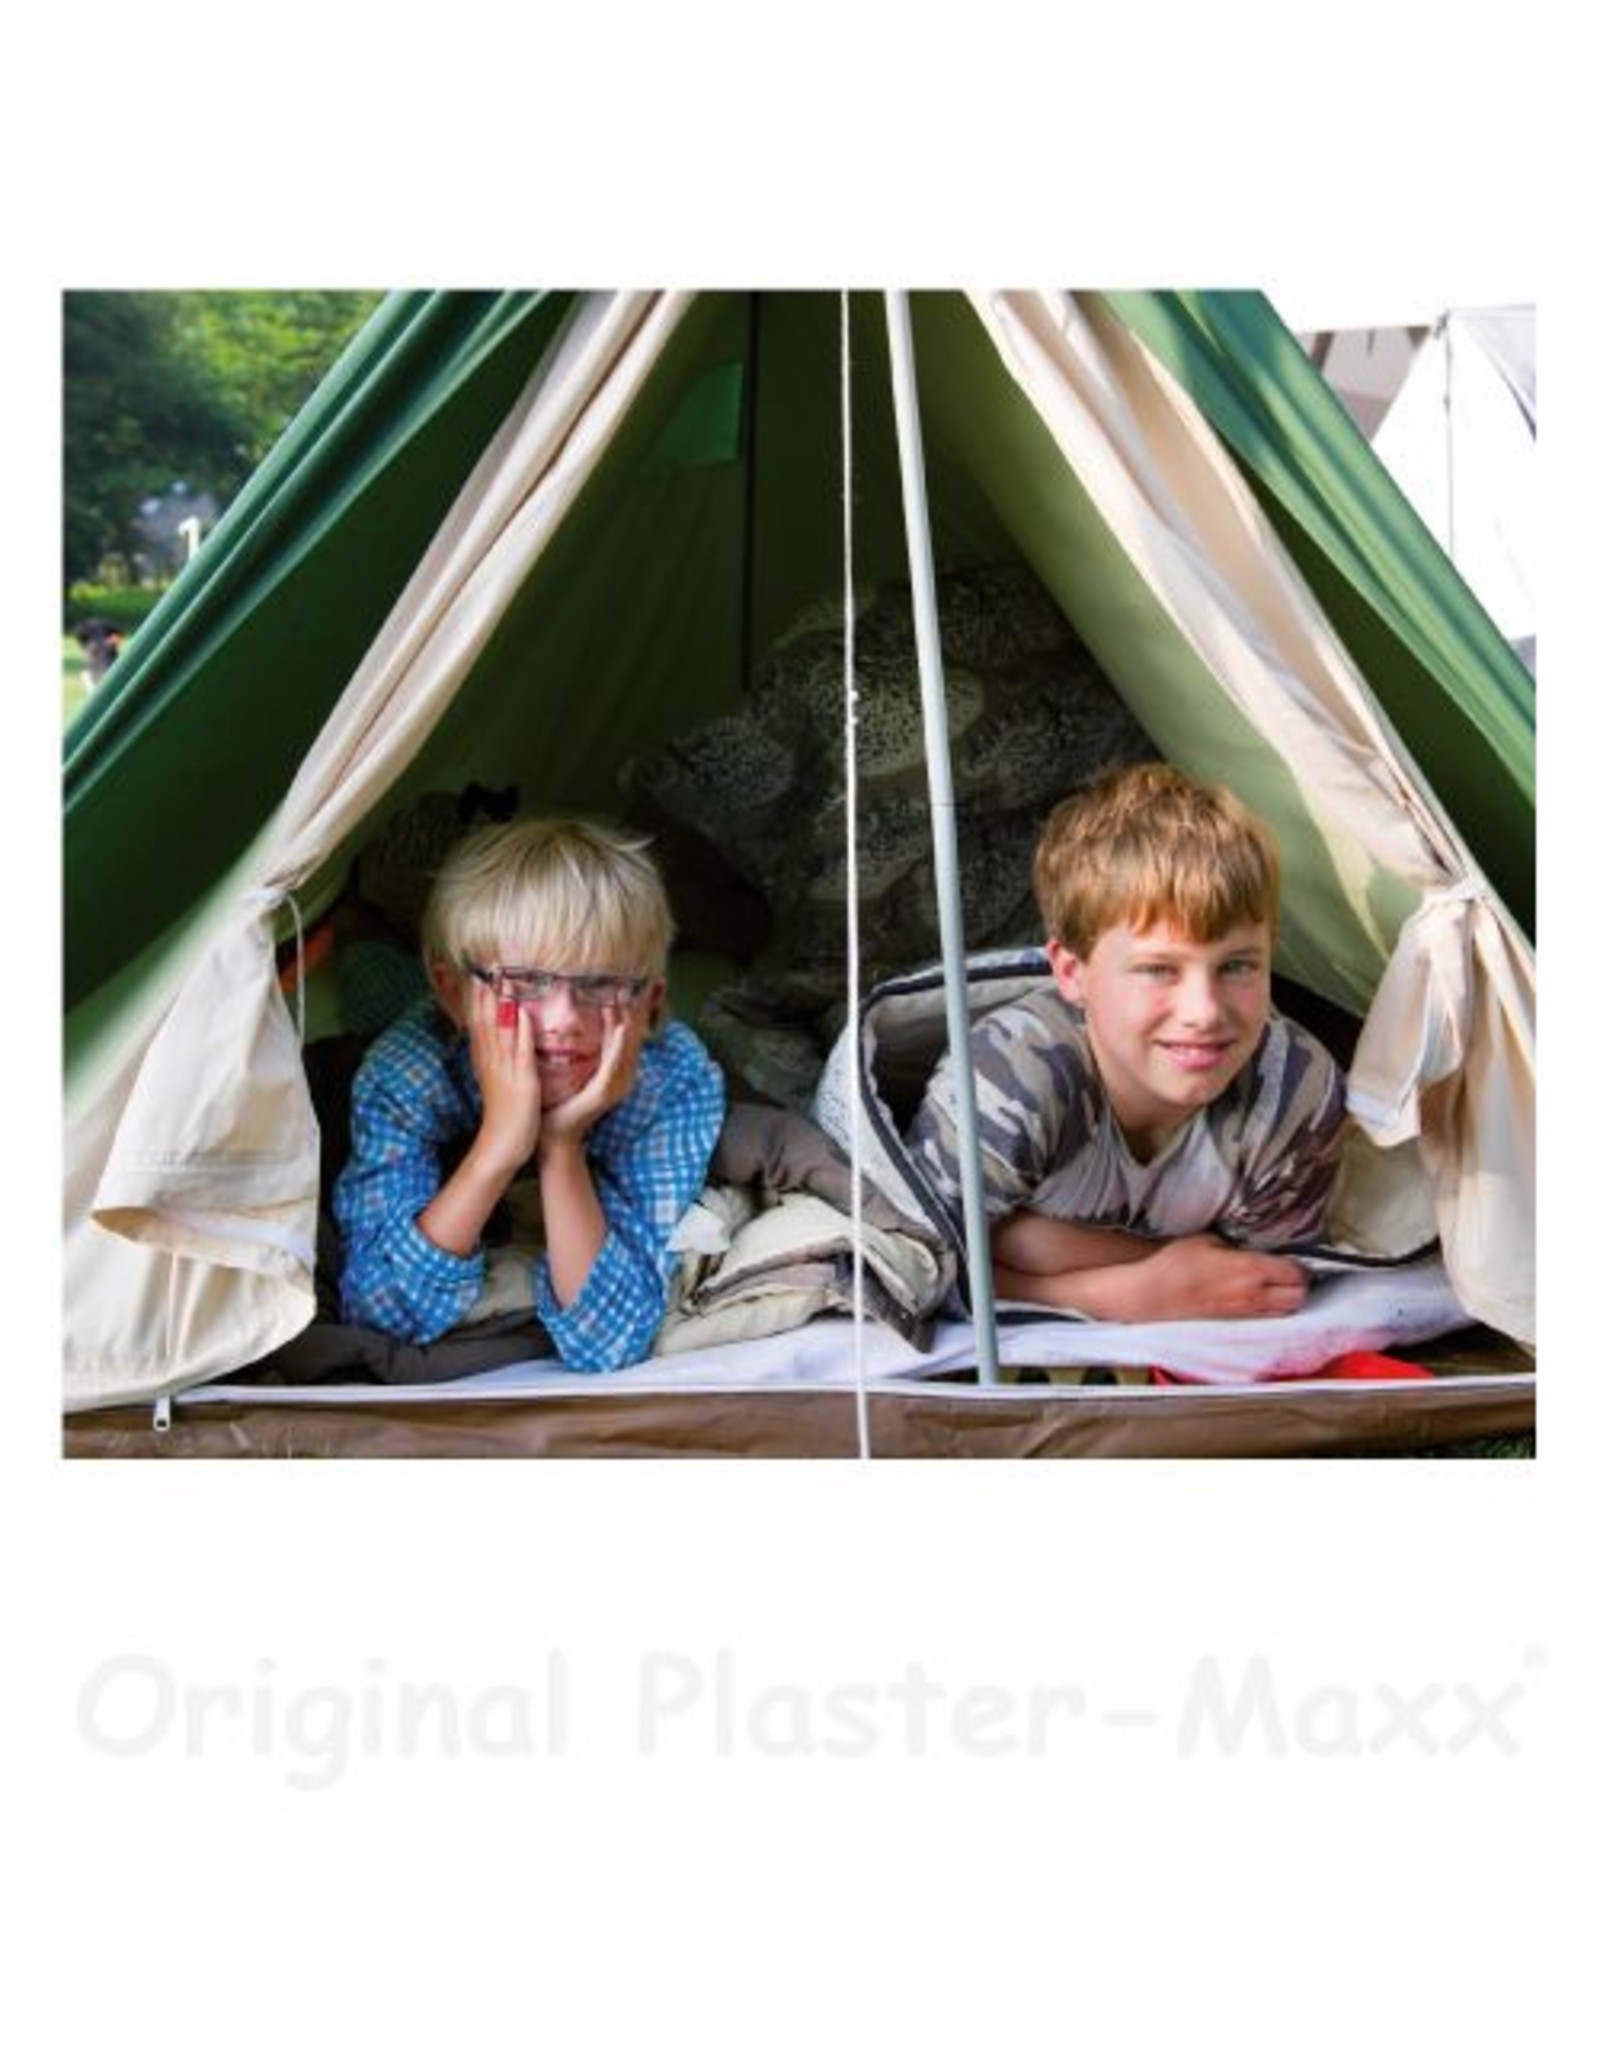 Plaster-Maxx Plaster-Maxx - Valueset 2xSkin, 1xPink